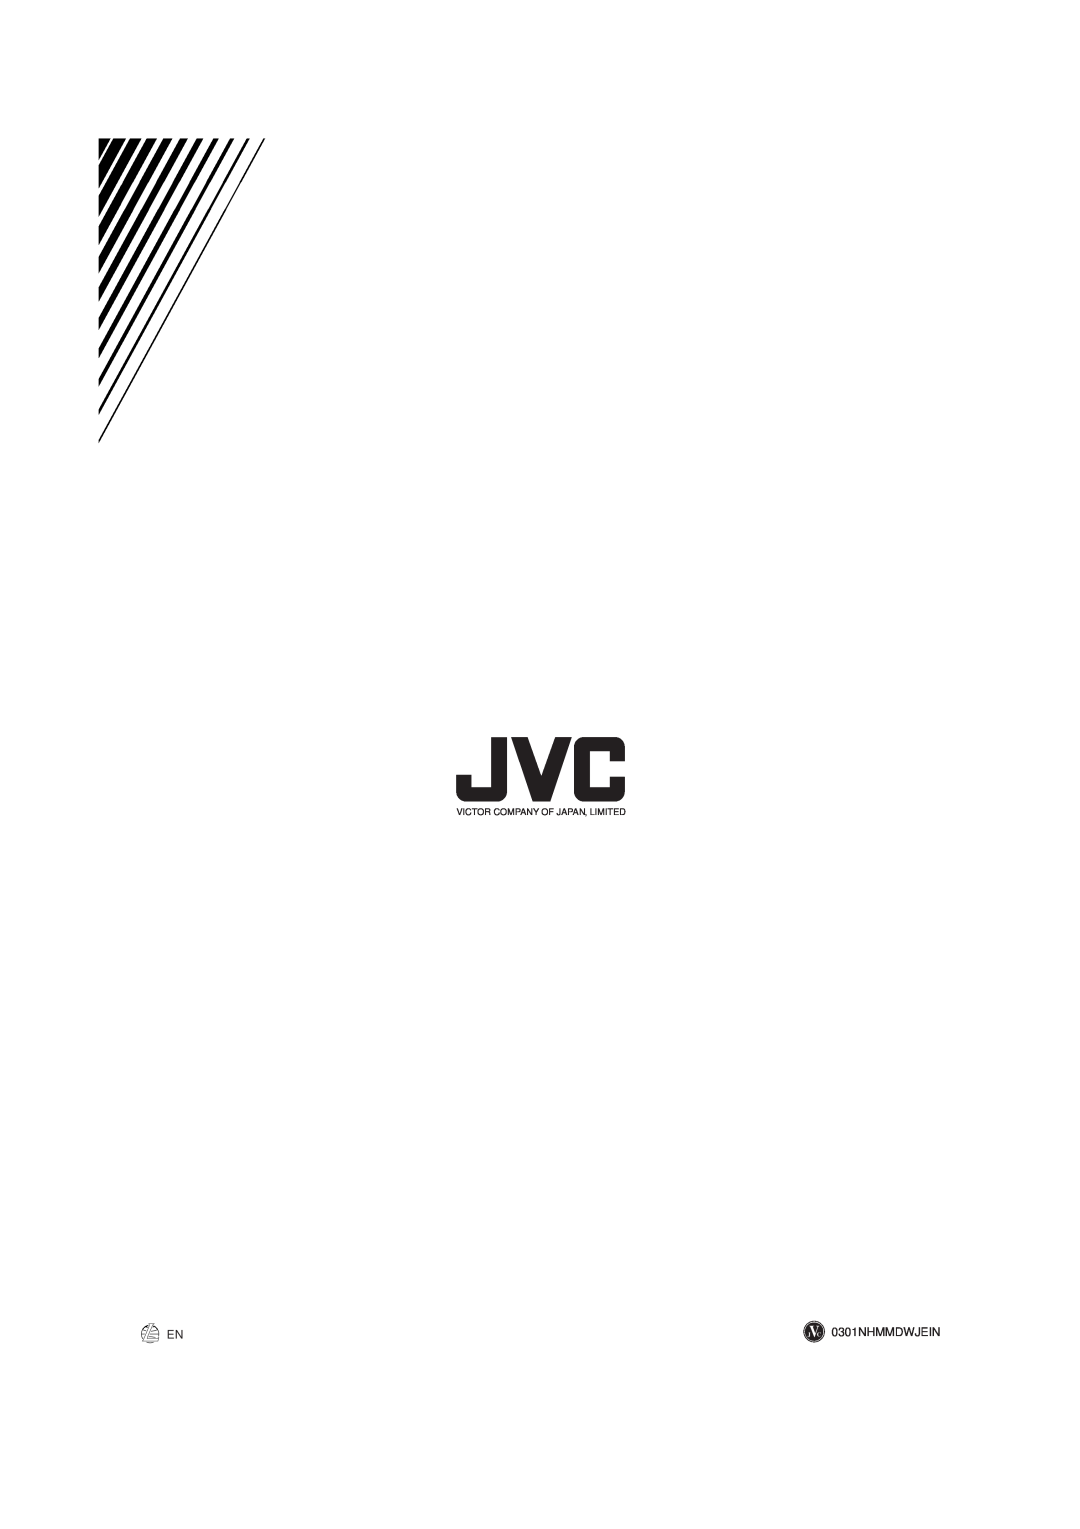 JVC RX-E100SL manual 0301NHMMDWJEIN, Victor Company Of Japan, Limited 